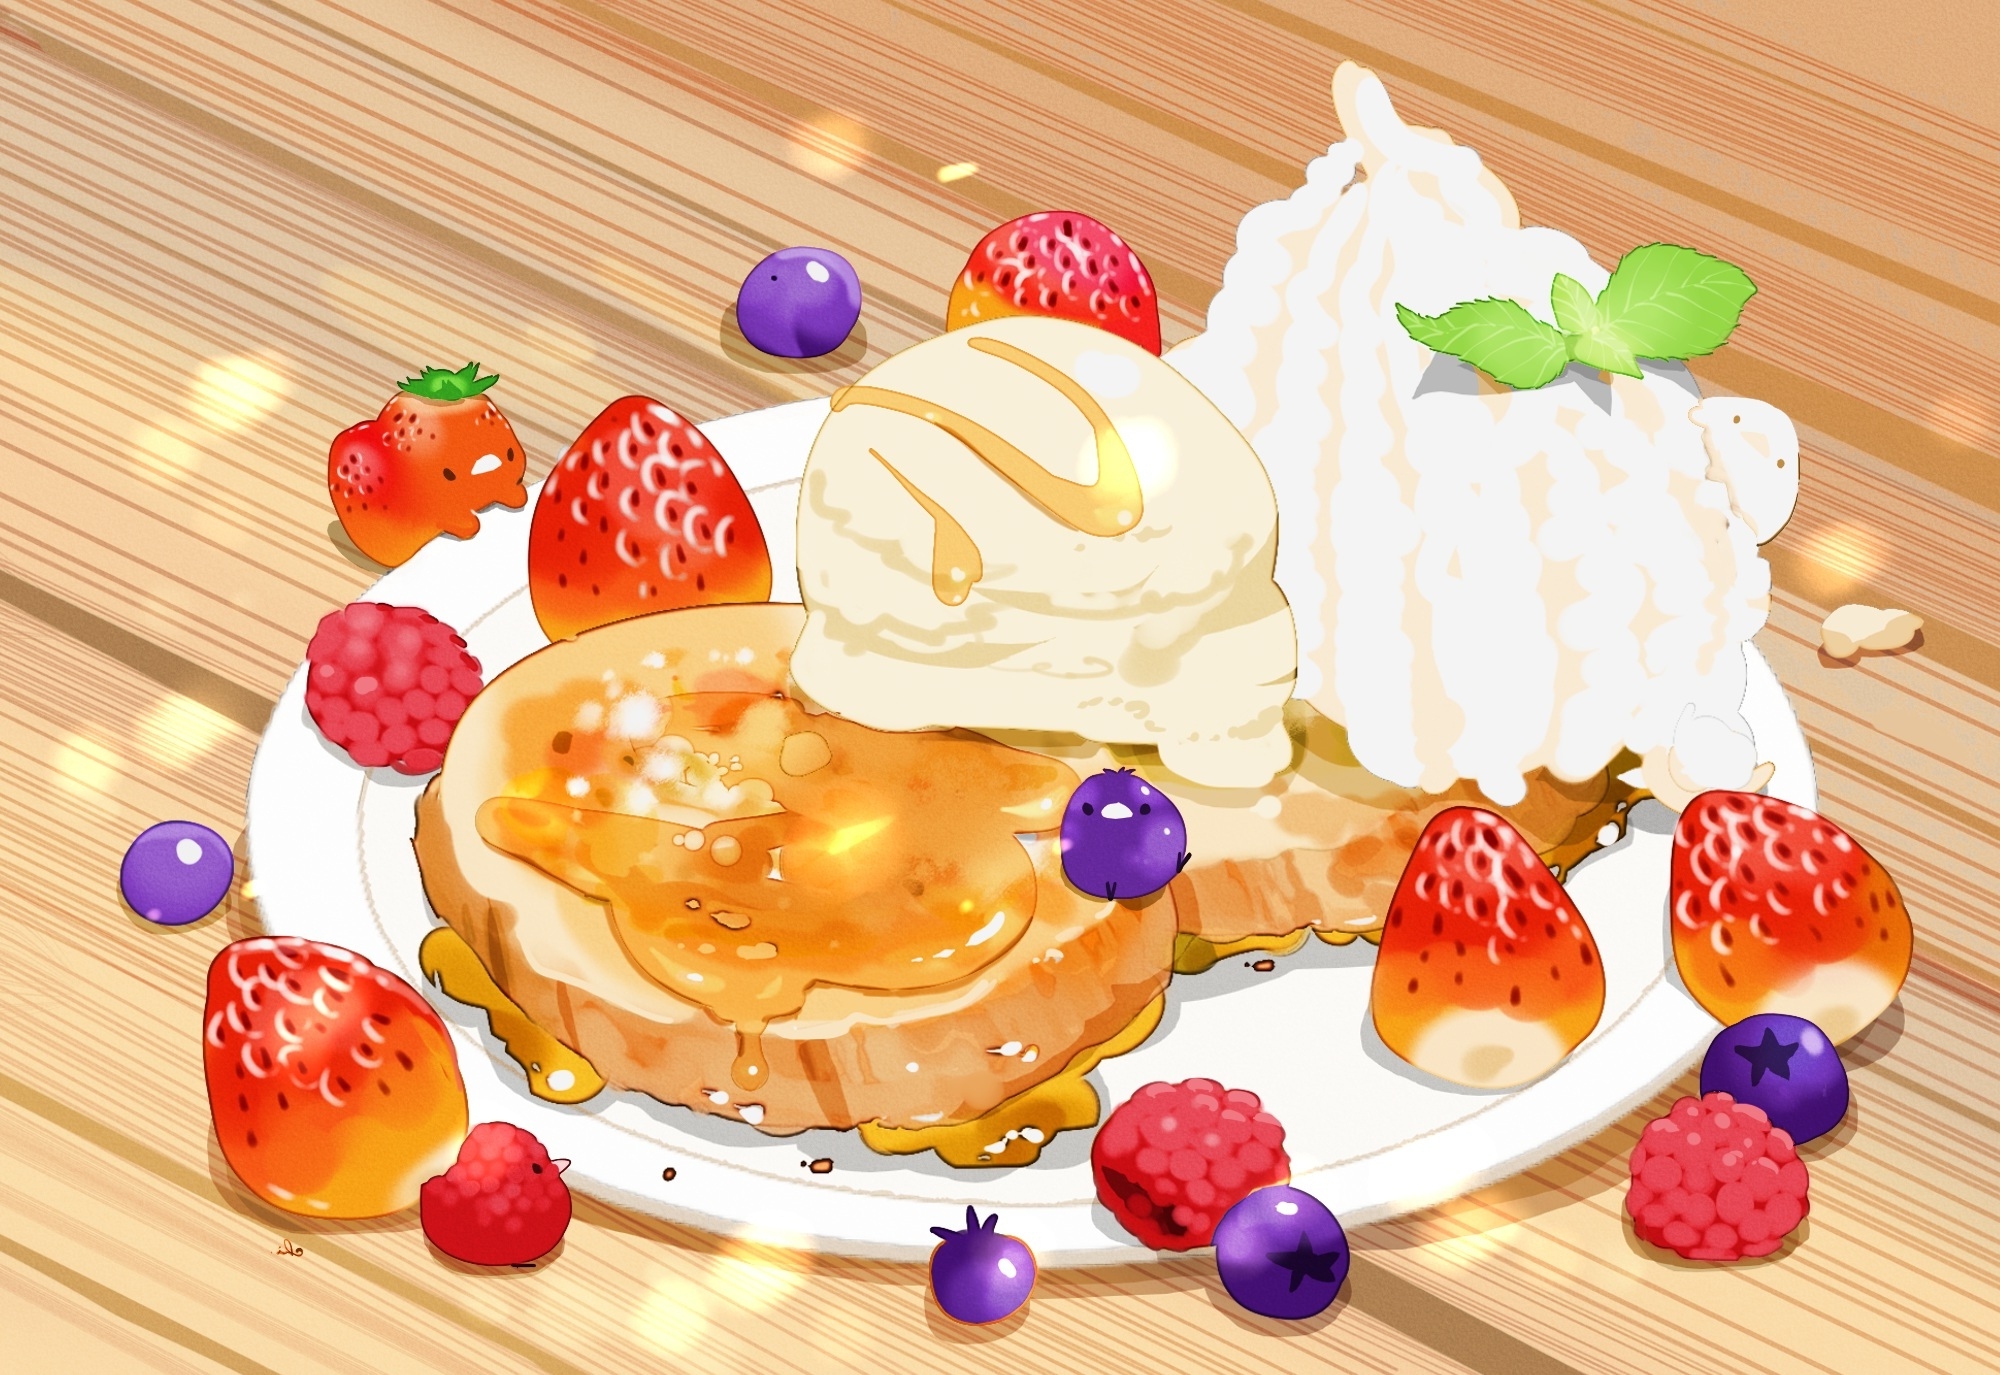 Wallpaper Cake, Ice Cream, Strawberry, Anime Food, Dessert:2000x1375